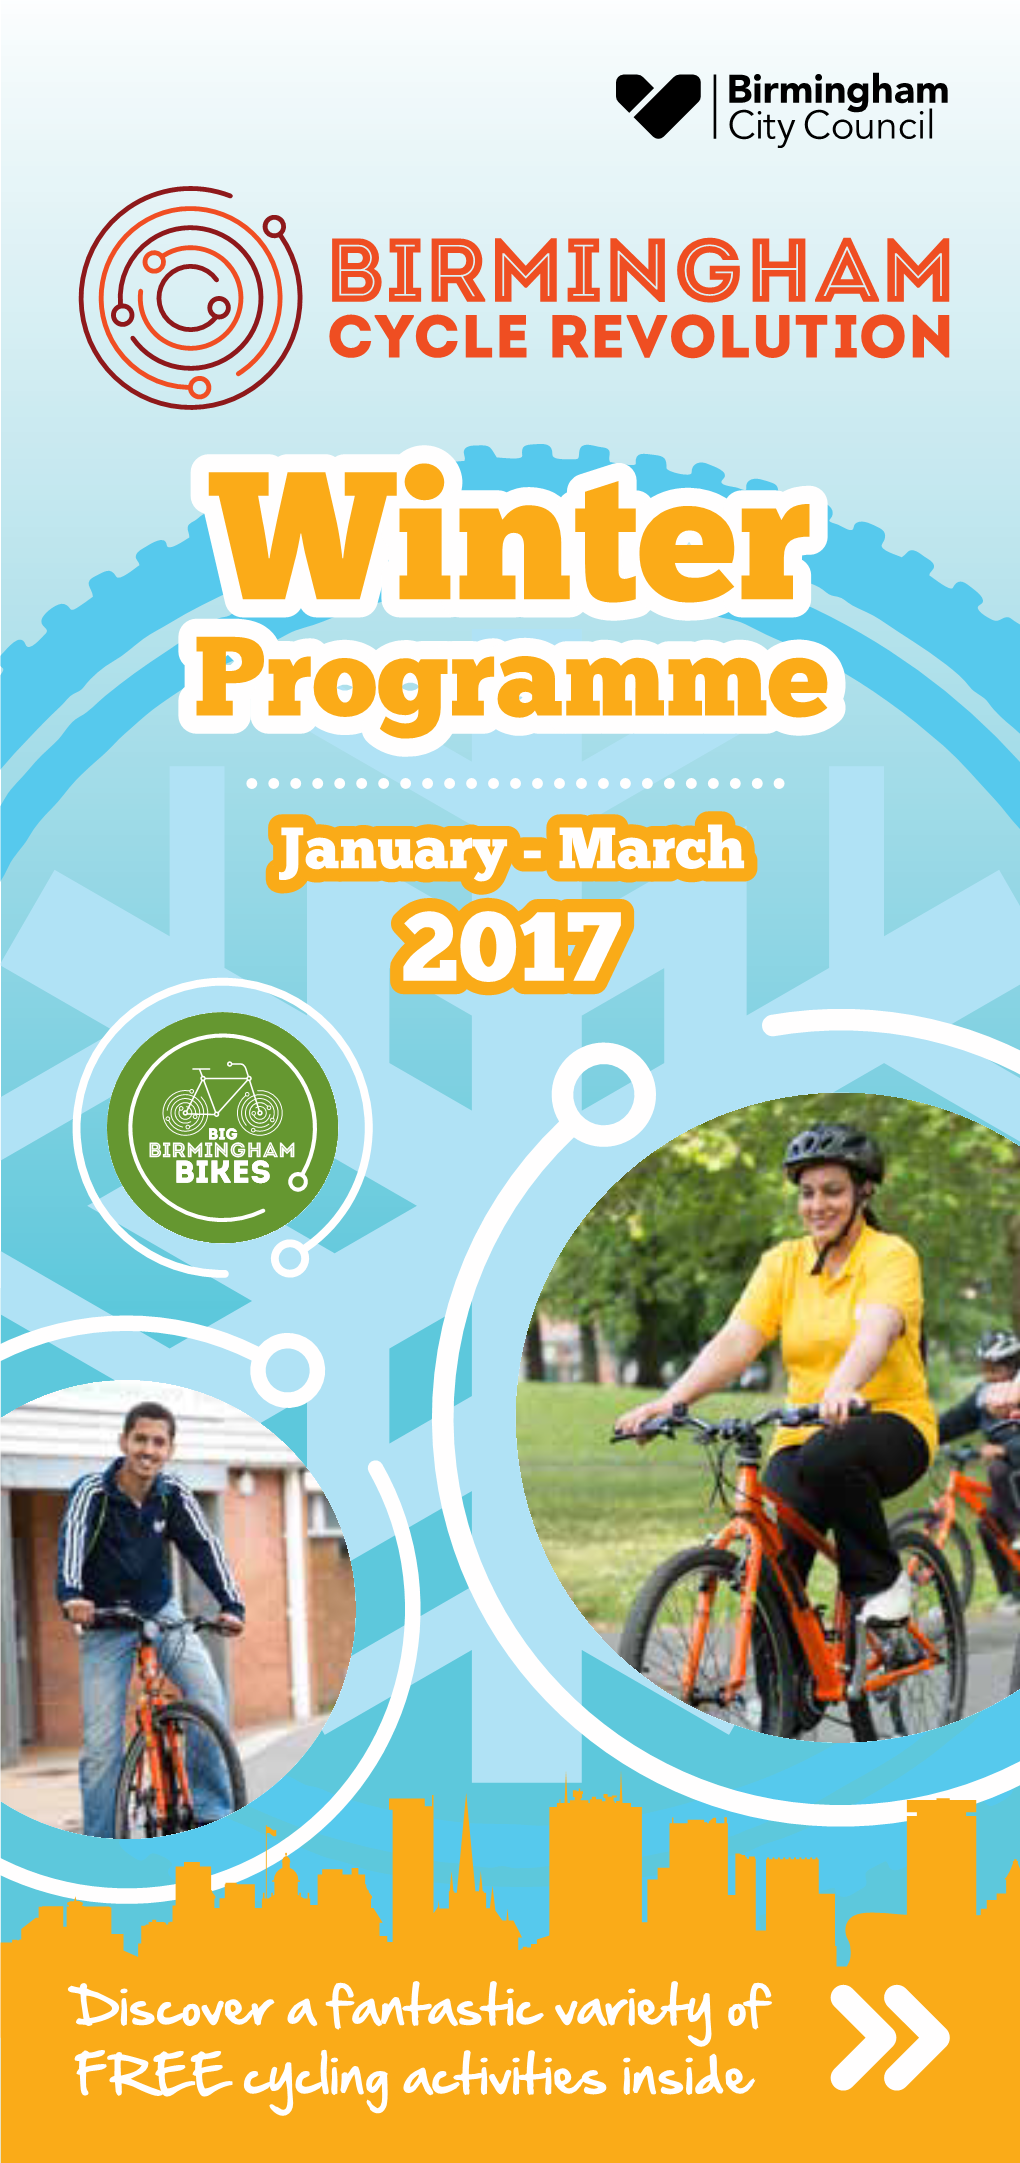 Winter Programme